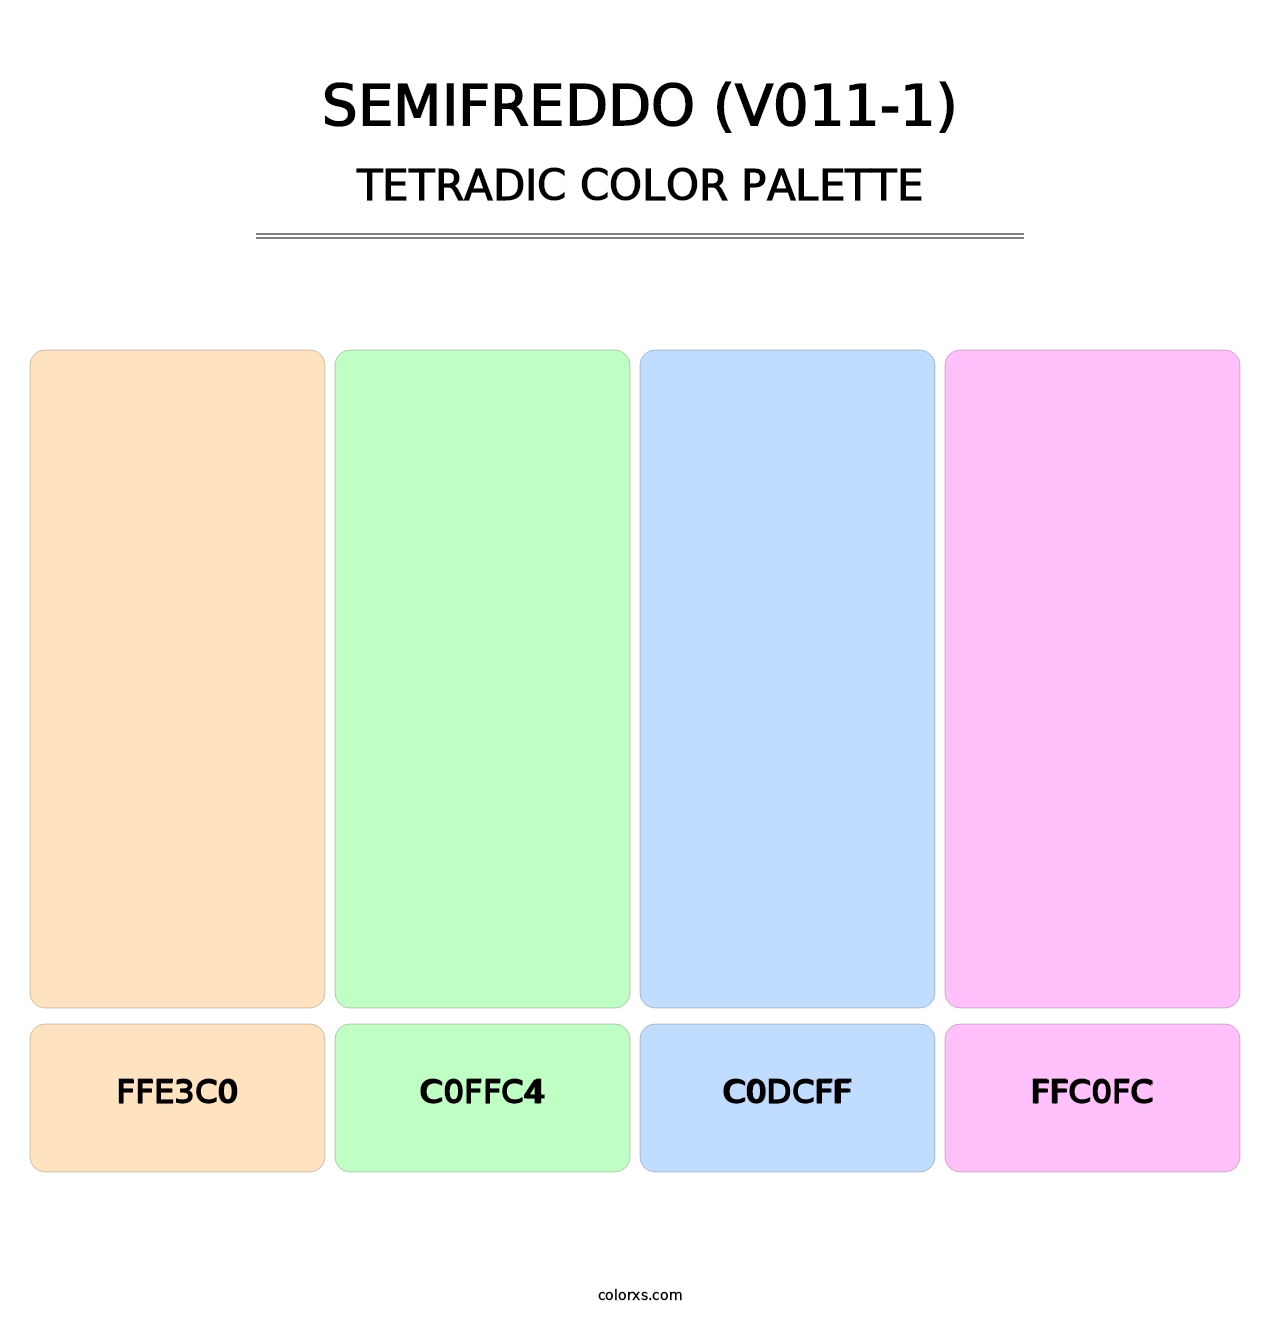 Semifreddo (V011-1) - Tetradic Color Palette